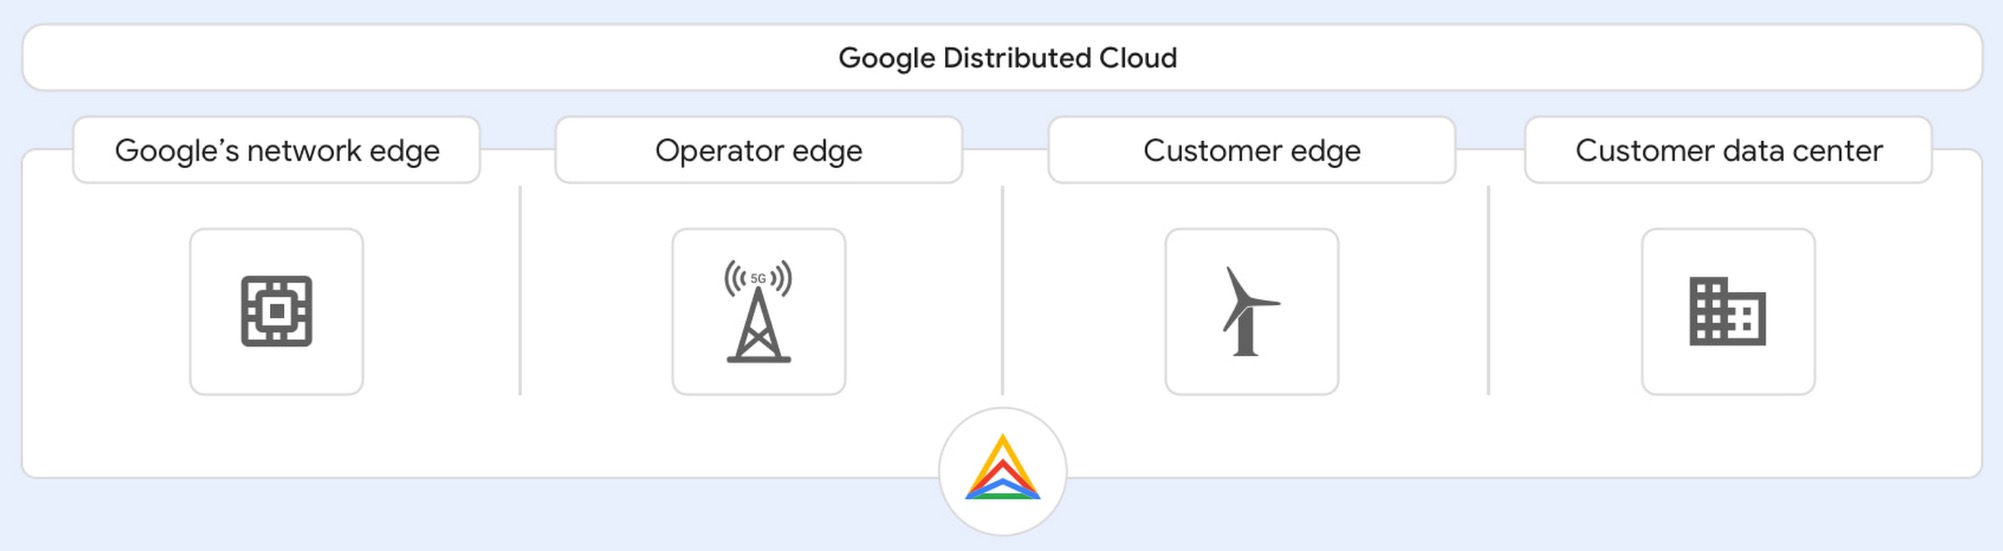 Google анонсировала Distributed Cloud, обновления облачных служб аналитики и ИИ